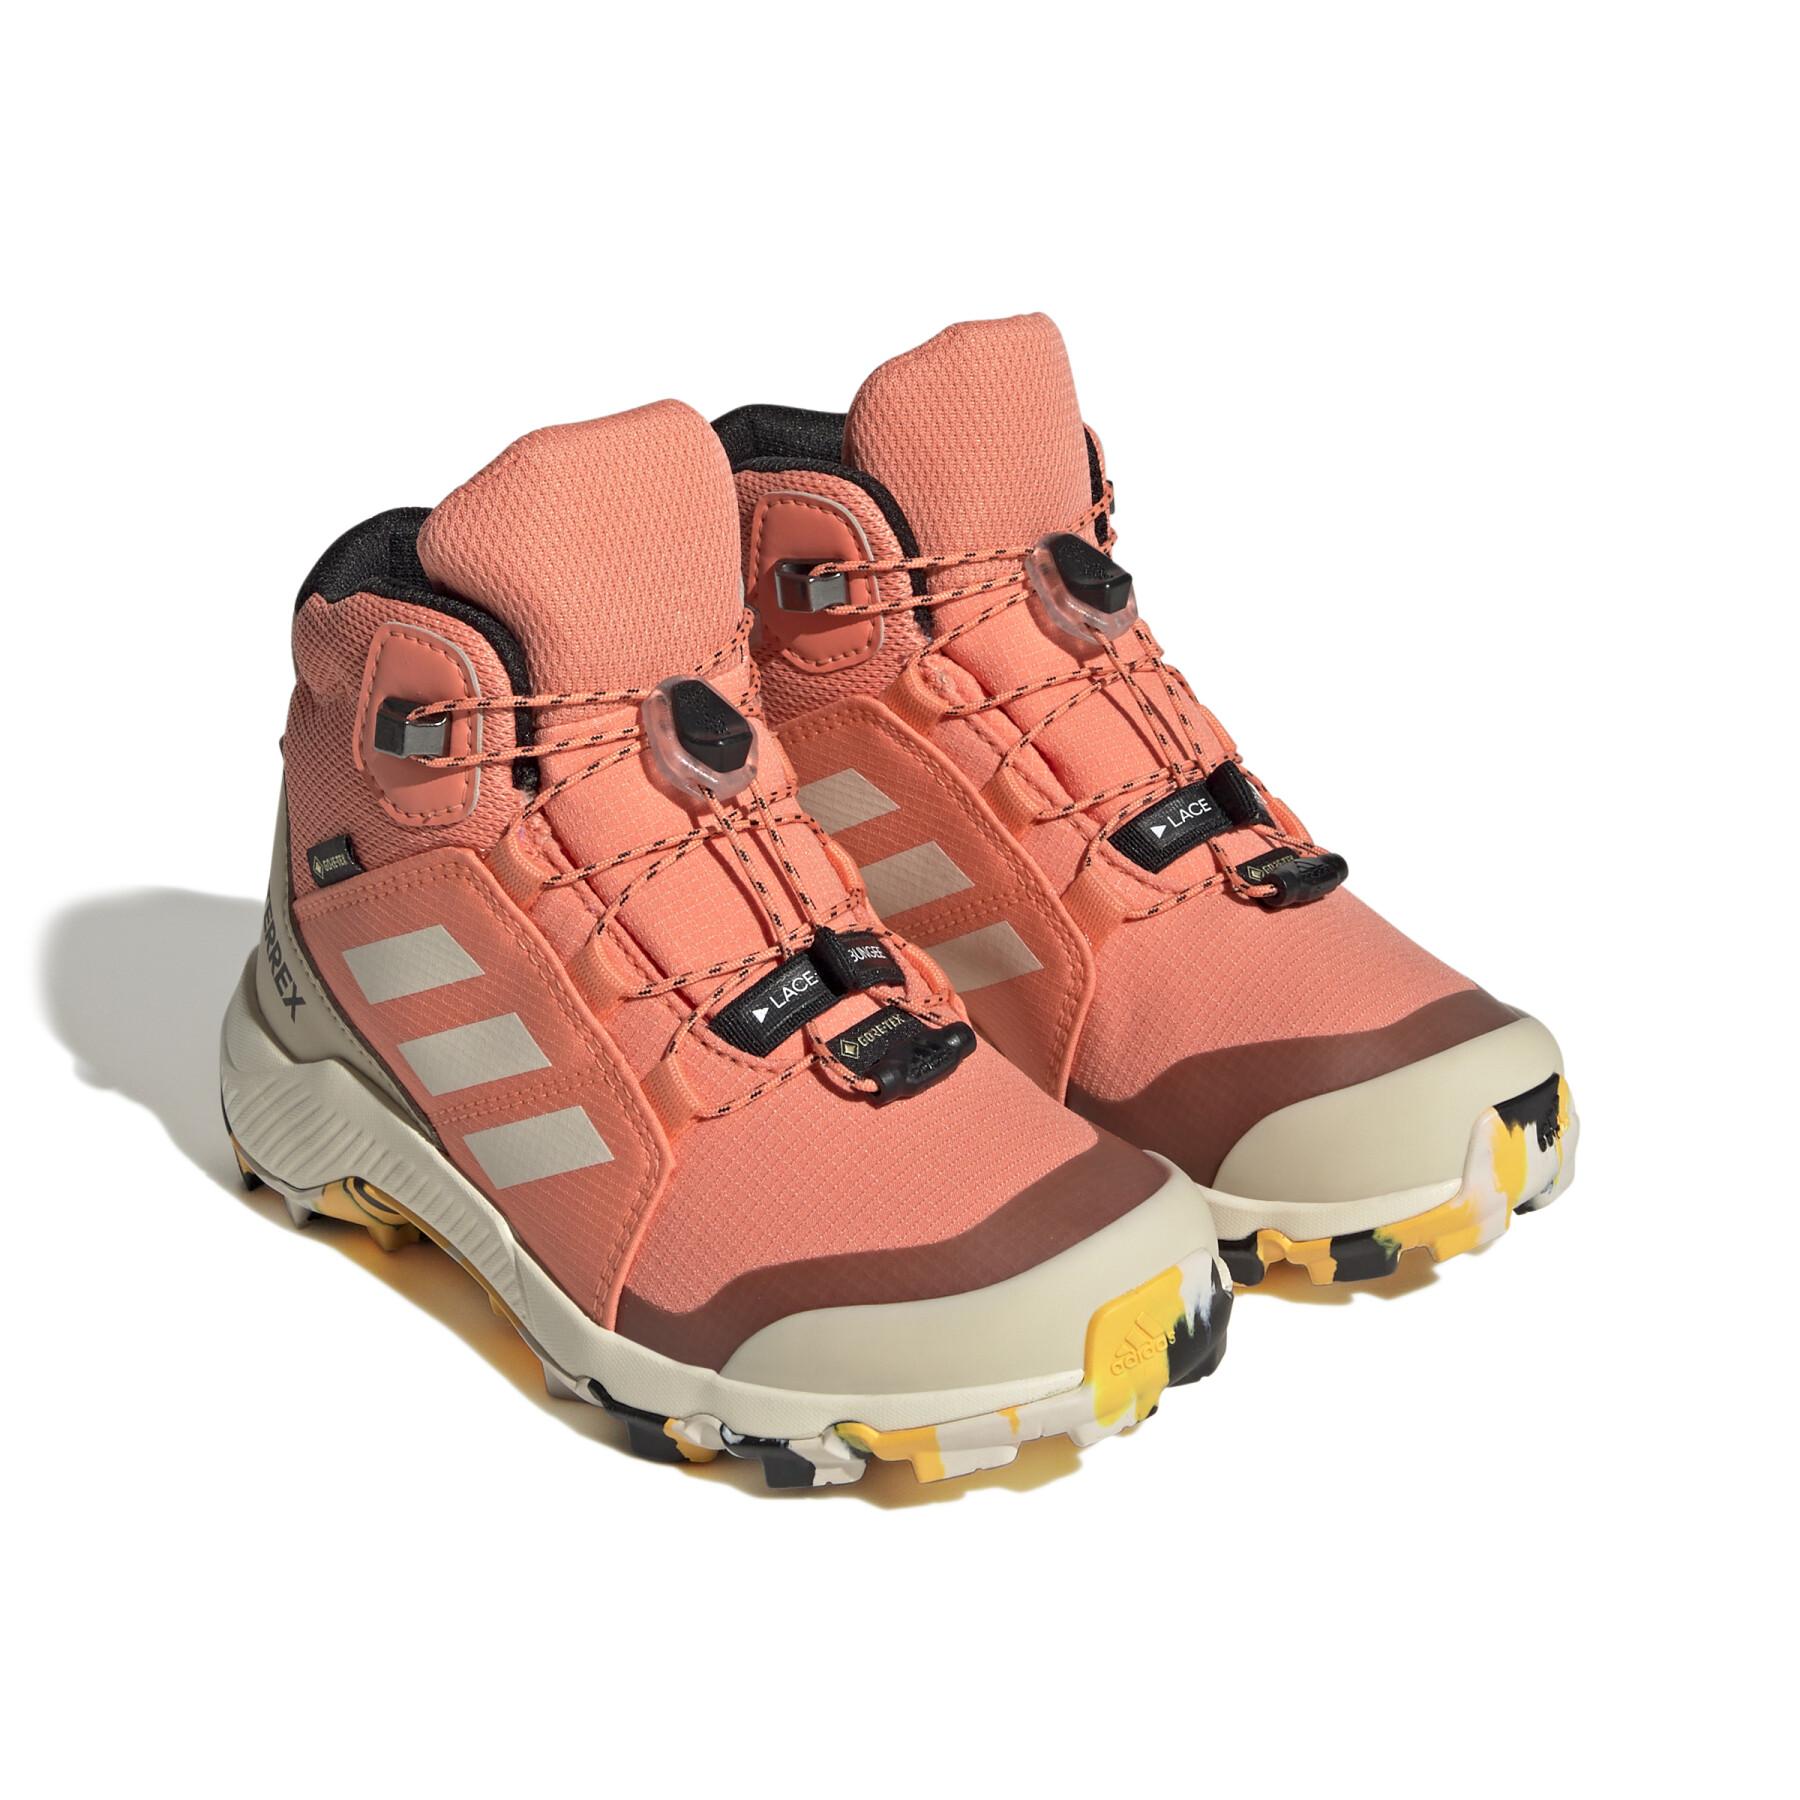 Zapatillas de senderismo para niña adidas Terrex Mid GORE-TEX